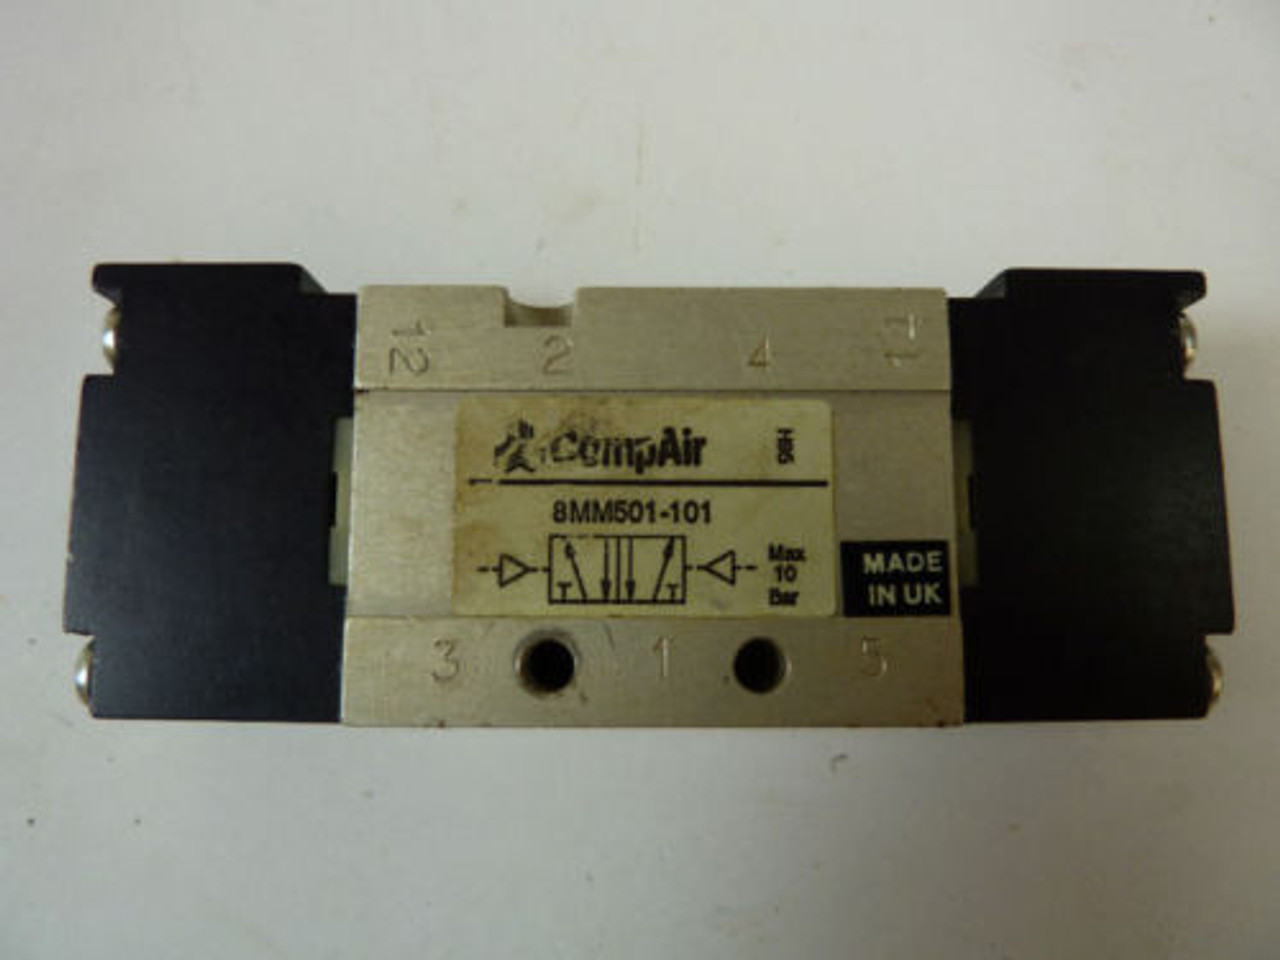 CompAir 8MM501-101 Solenoid Valve 10 Bar USED